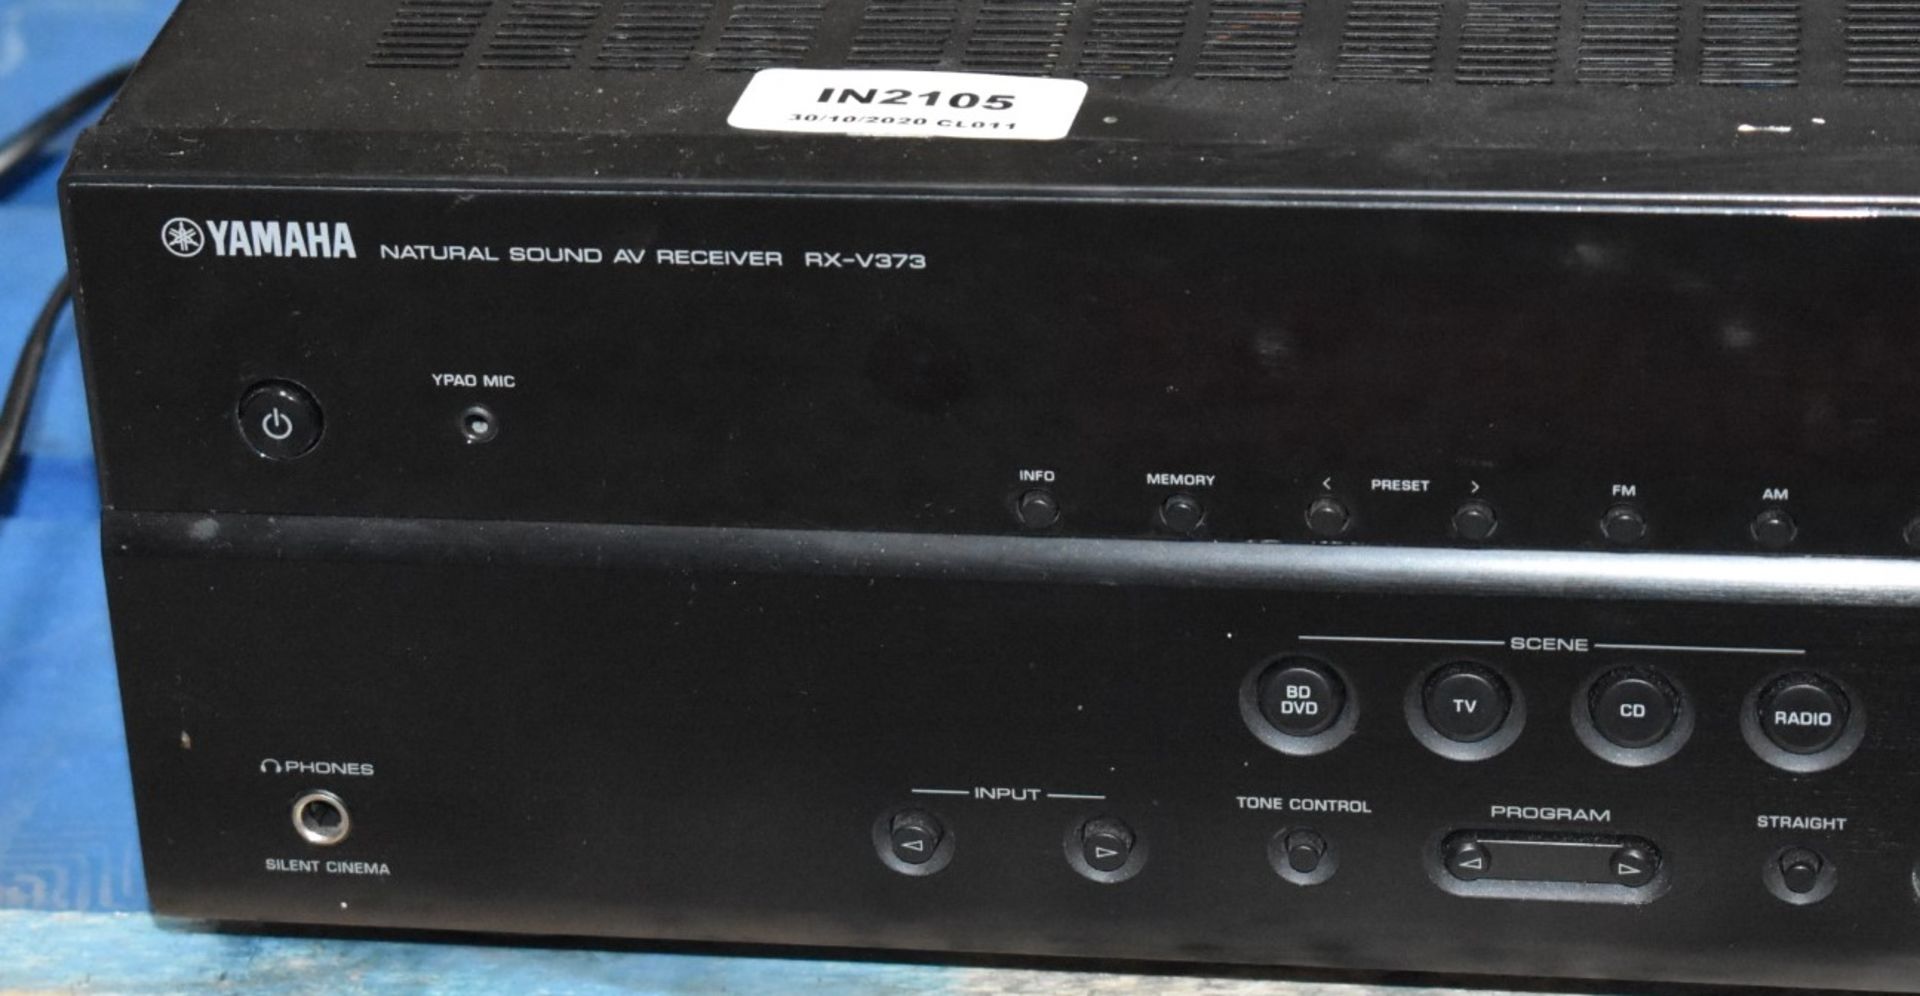 1 x Yamaha RX-V373 Natural Sound AV Receiver - DSP Cinema Amp - Ref: In2105 Pal1 WH1 - CL546 - - Image 4 of 6